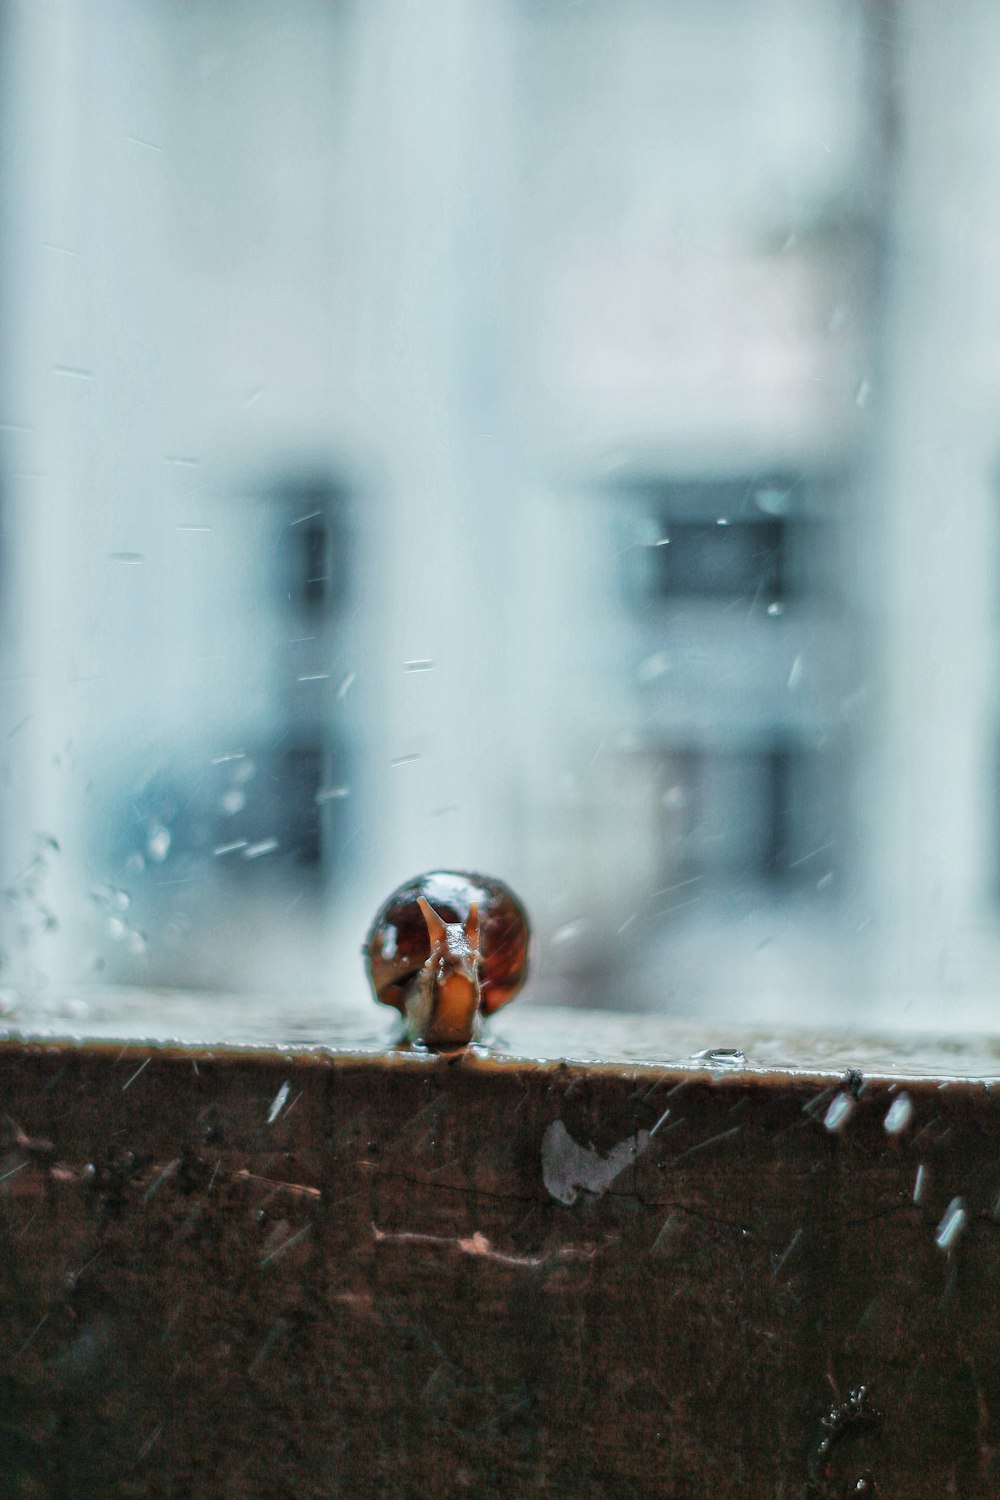 selective focus photograph of snail near window